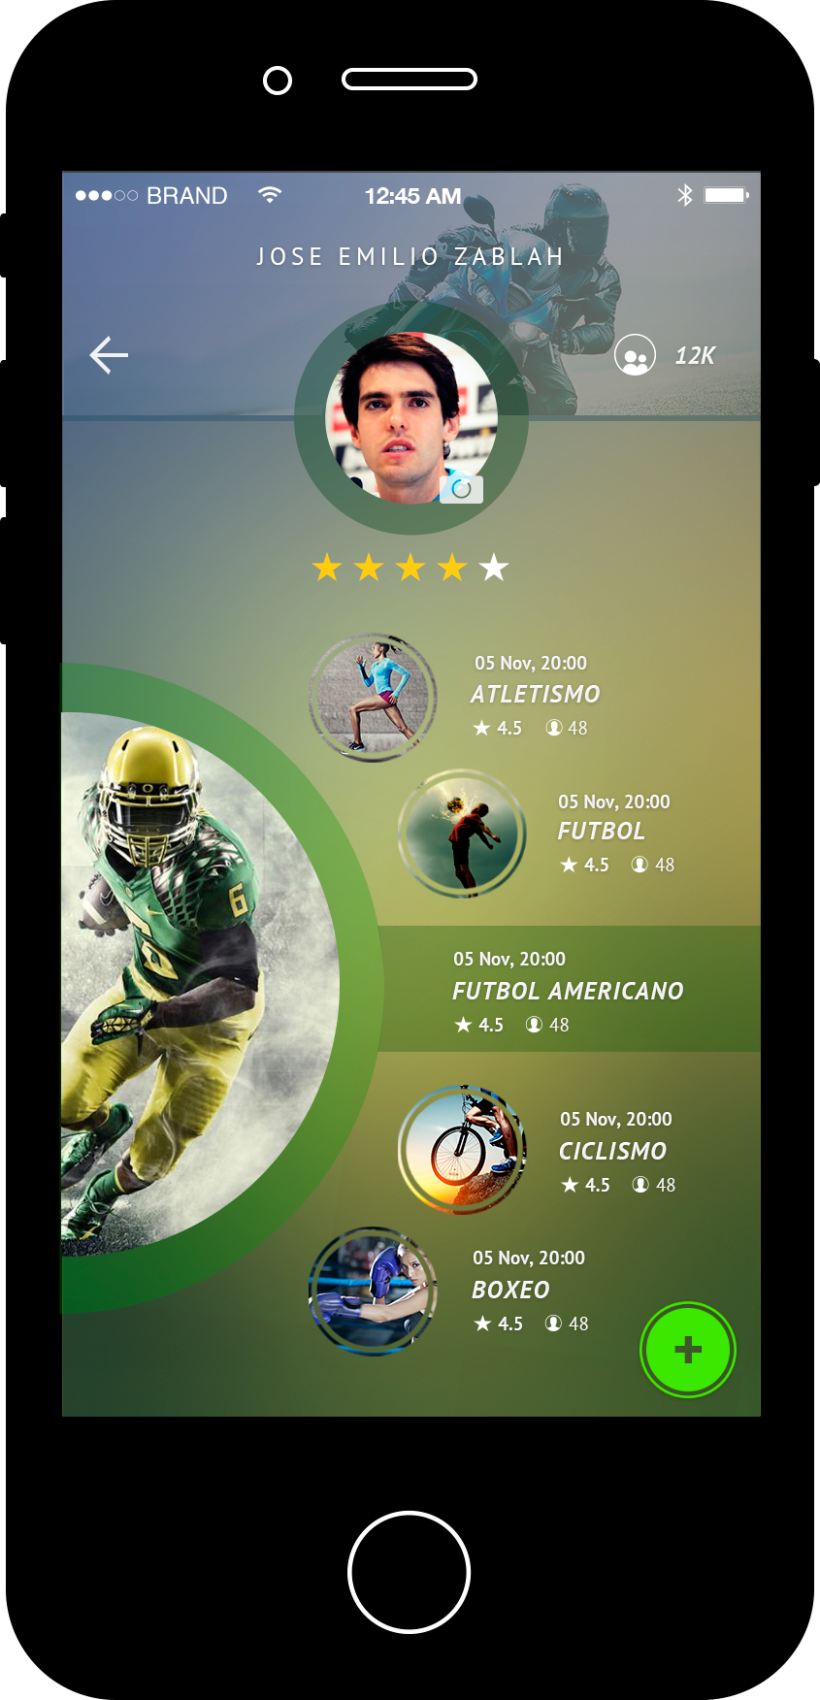 Diseño App - Zmag Sport 0